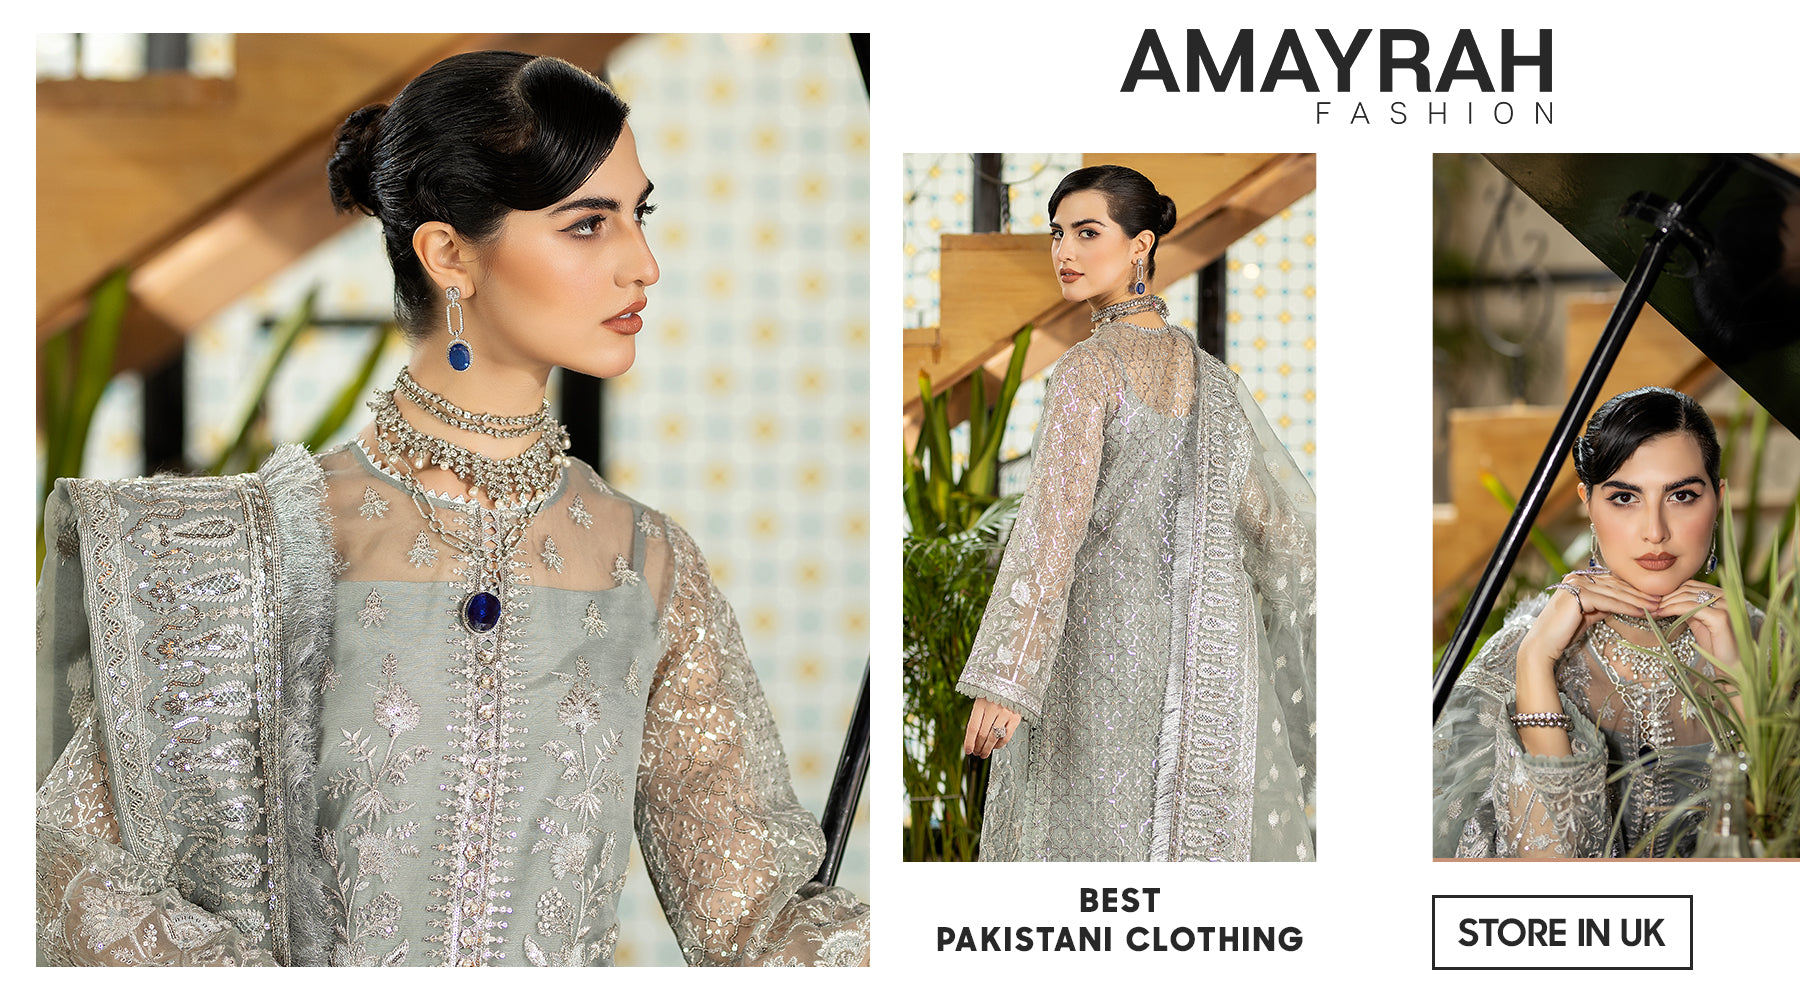 Explore Amayrah Fashion's Exquisite Pakistani Designer Clothing Collection